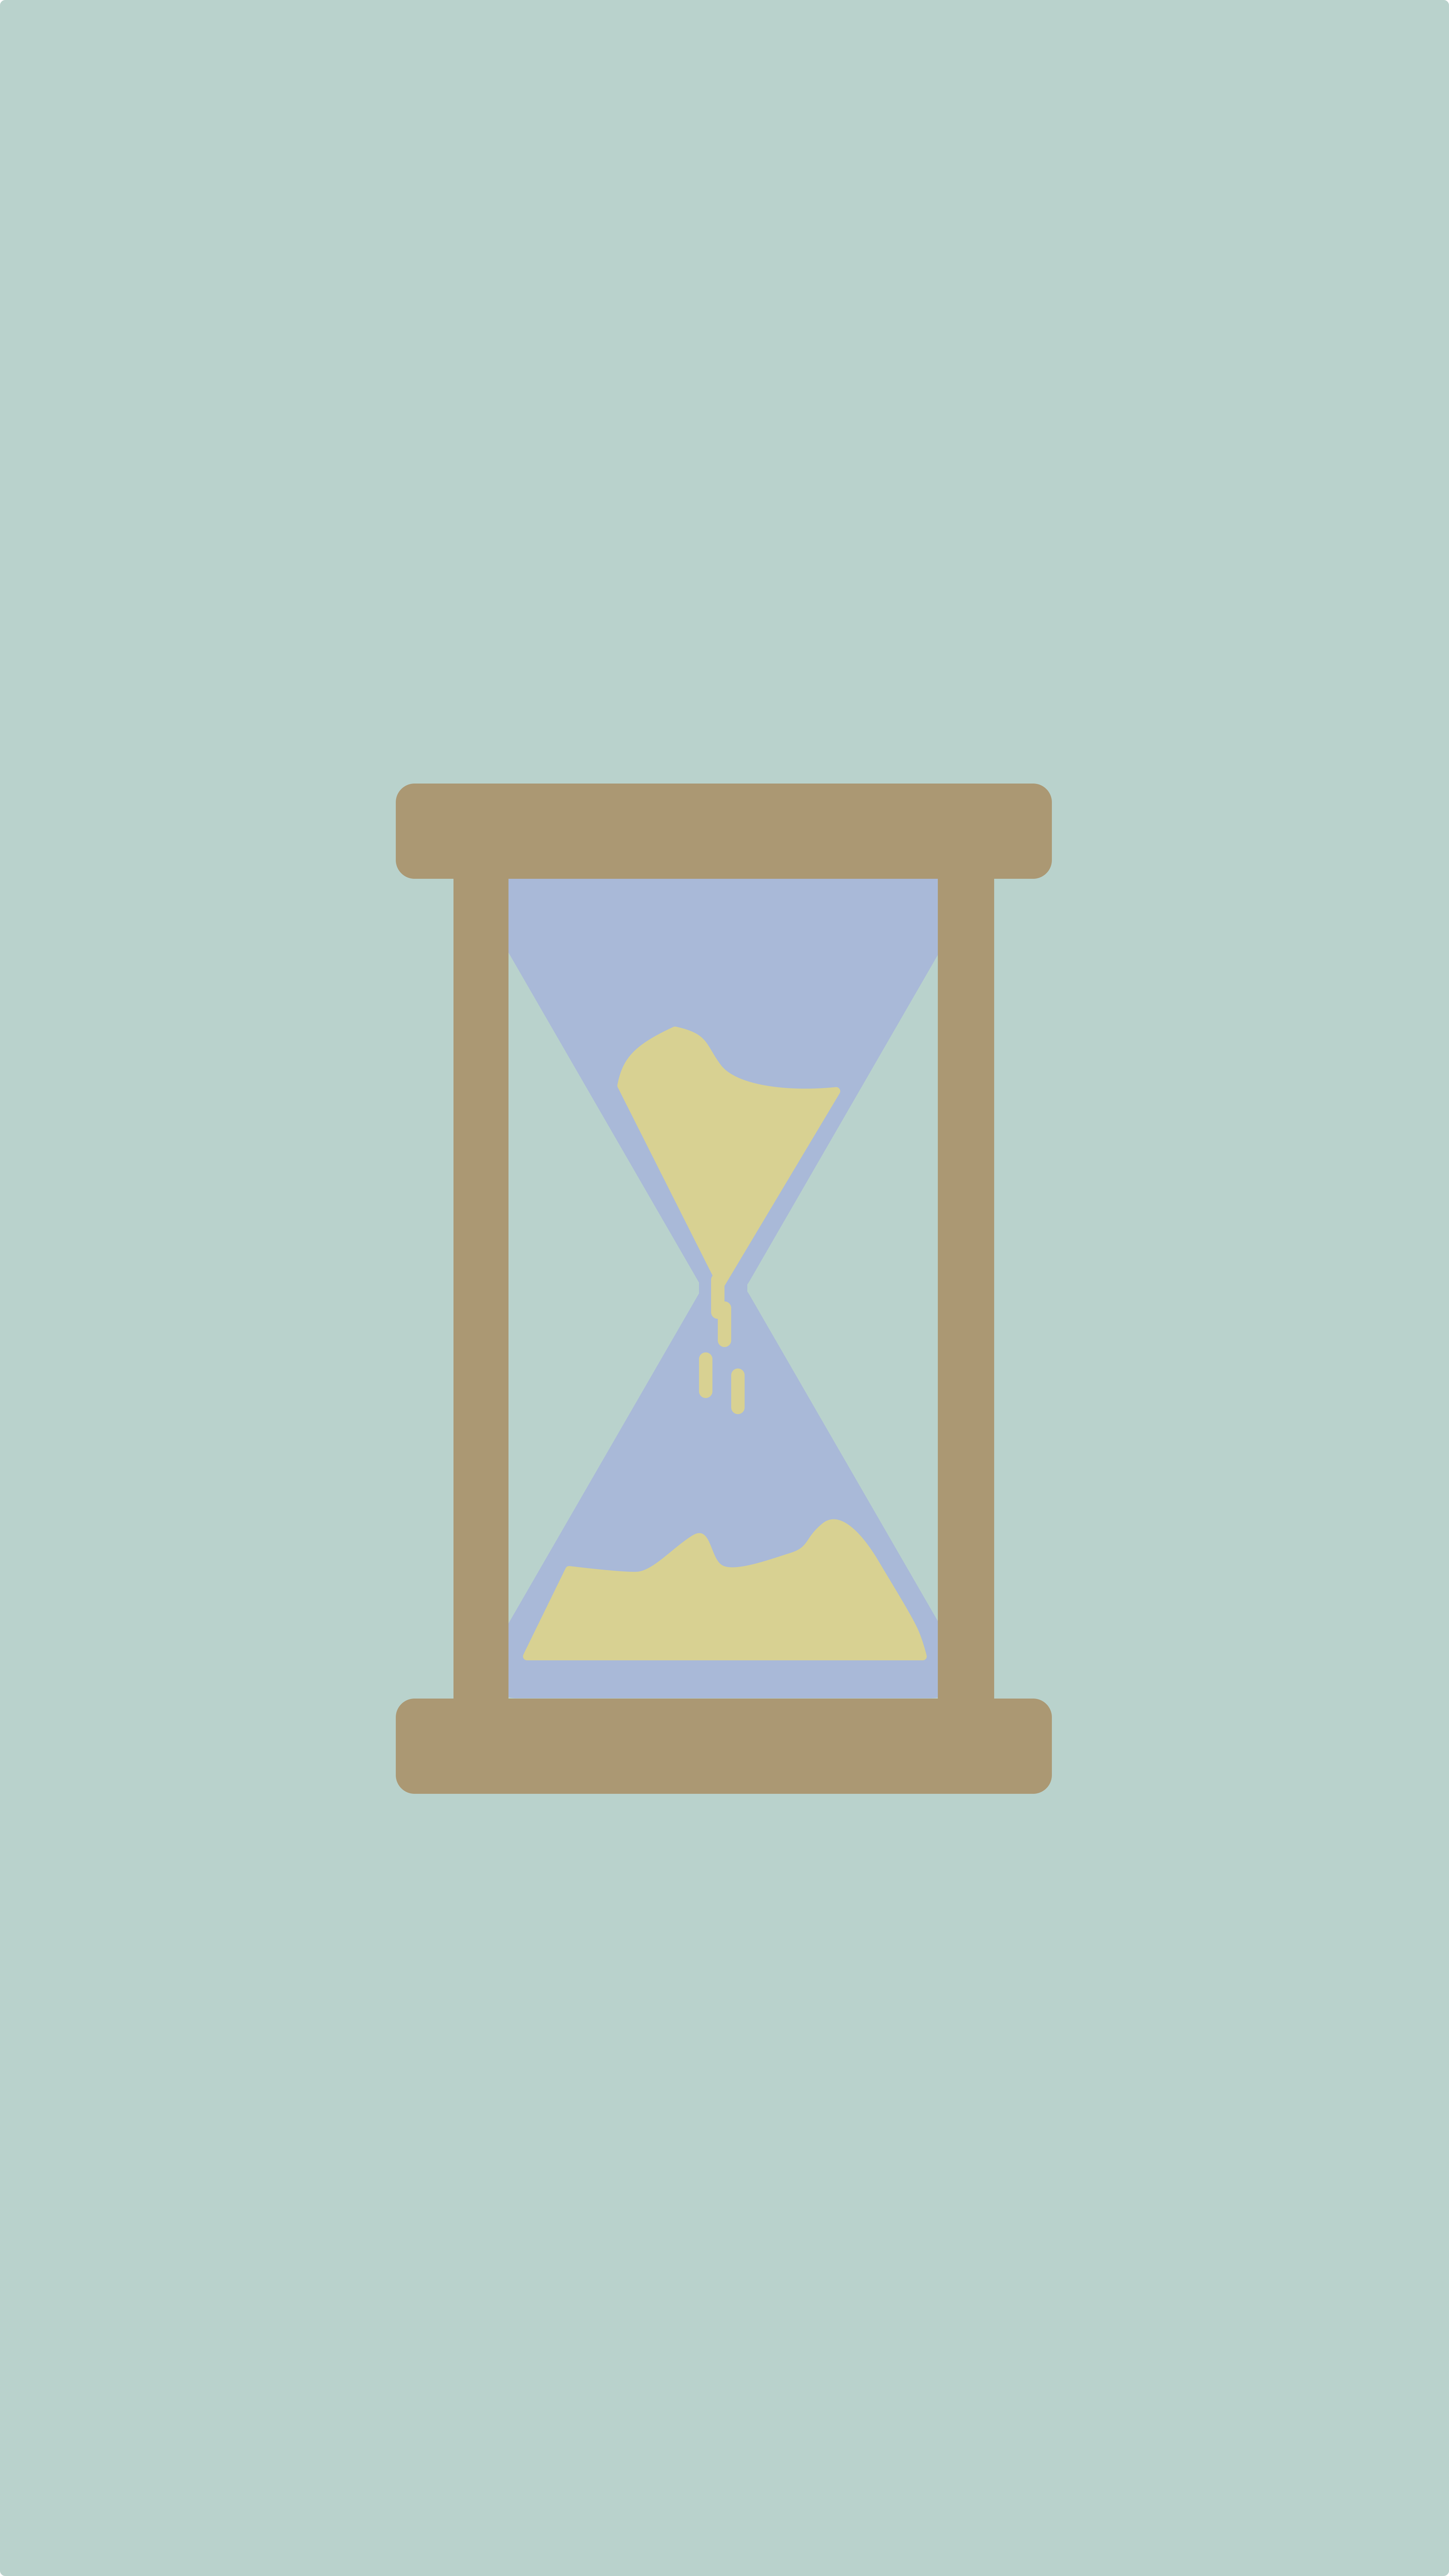 Minimlaistic Hourglass by Senzowa